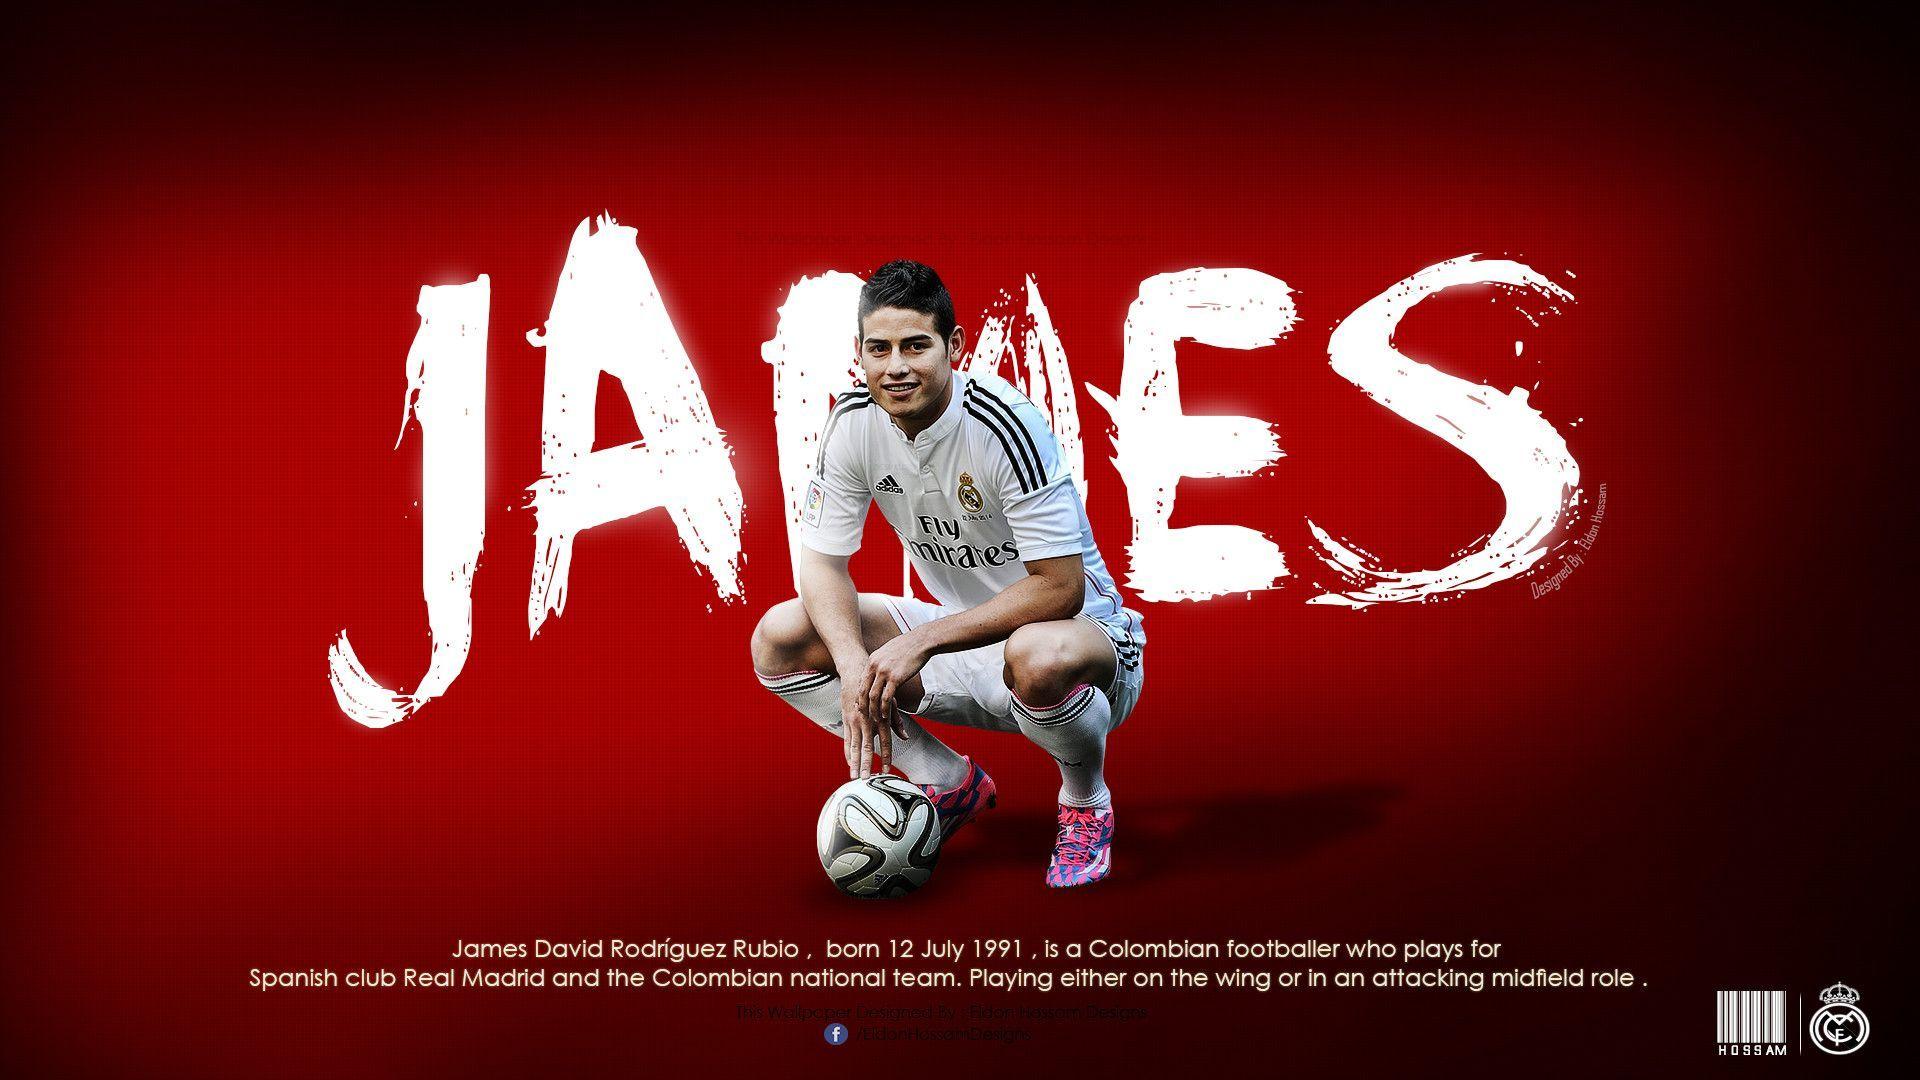 Download Mobile James Rodriguez 2015 Real Madrid Wallpaper. HD